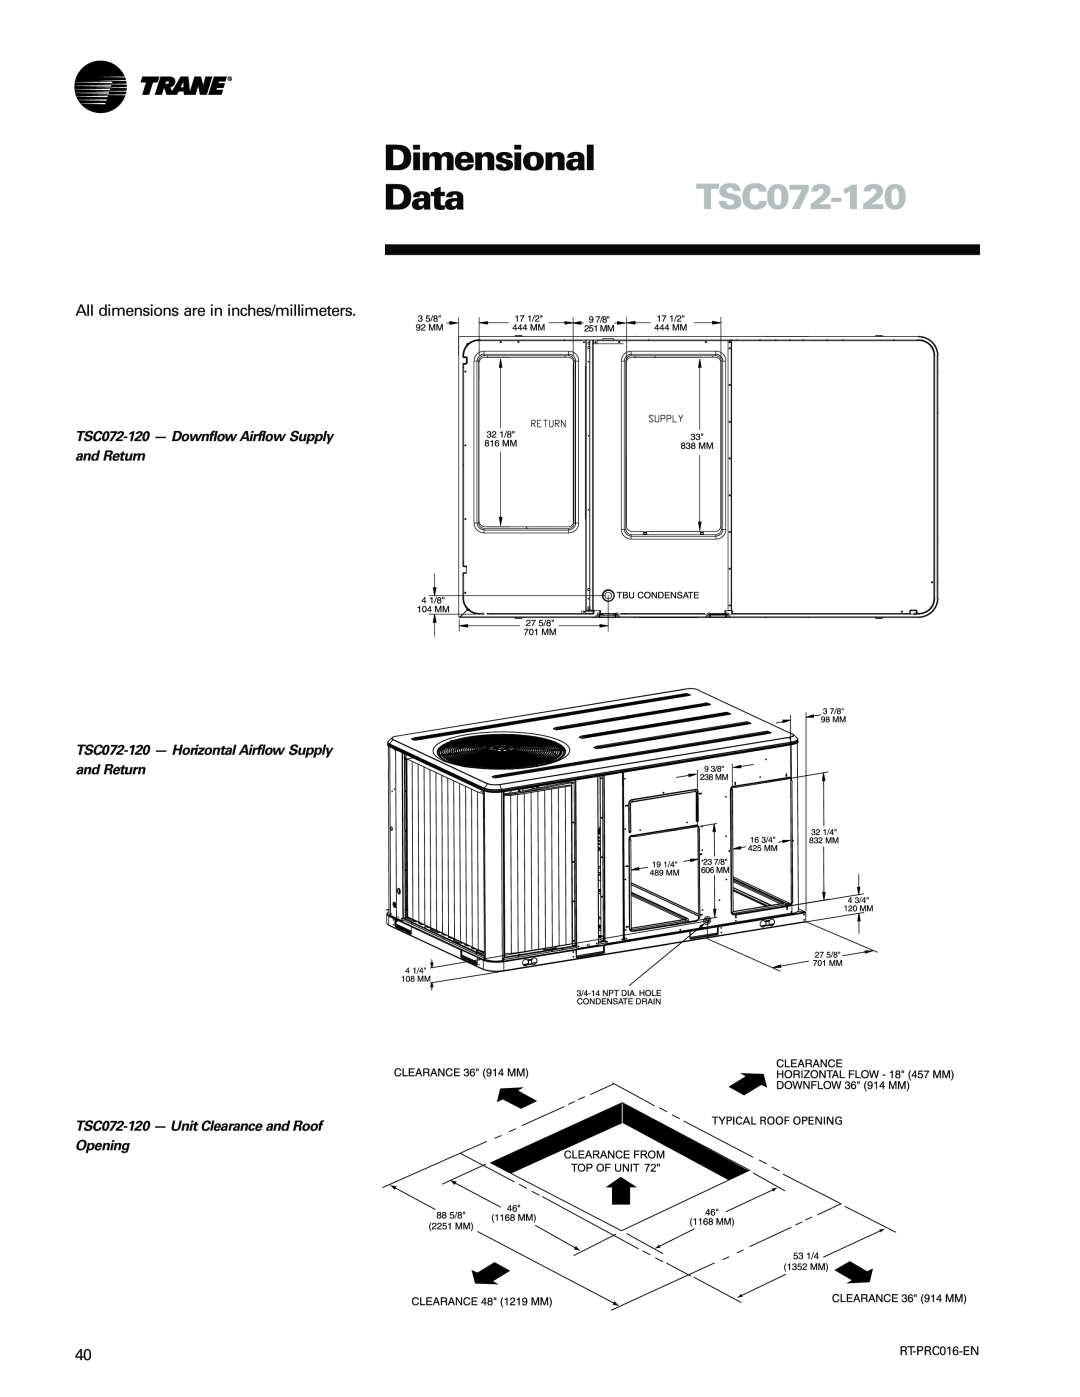 Trane TSC060-120 manual Dimensional, DataTSC072-120, TSC072-120- Downflow Airflow Supply and Return 